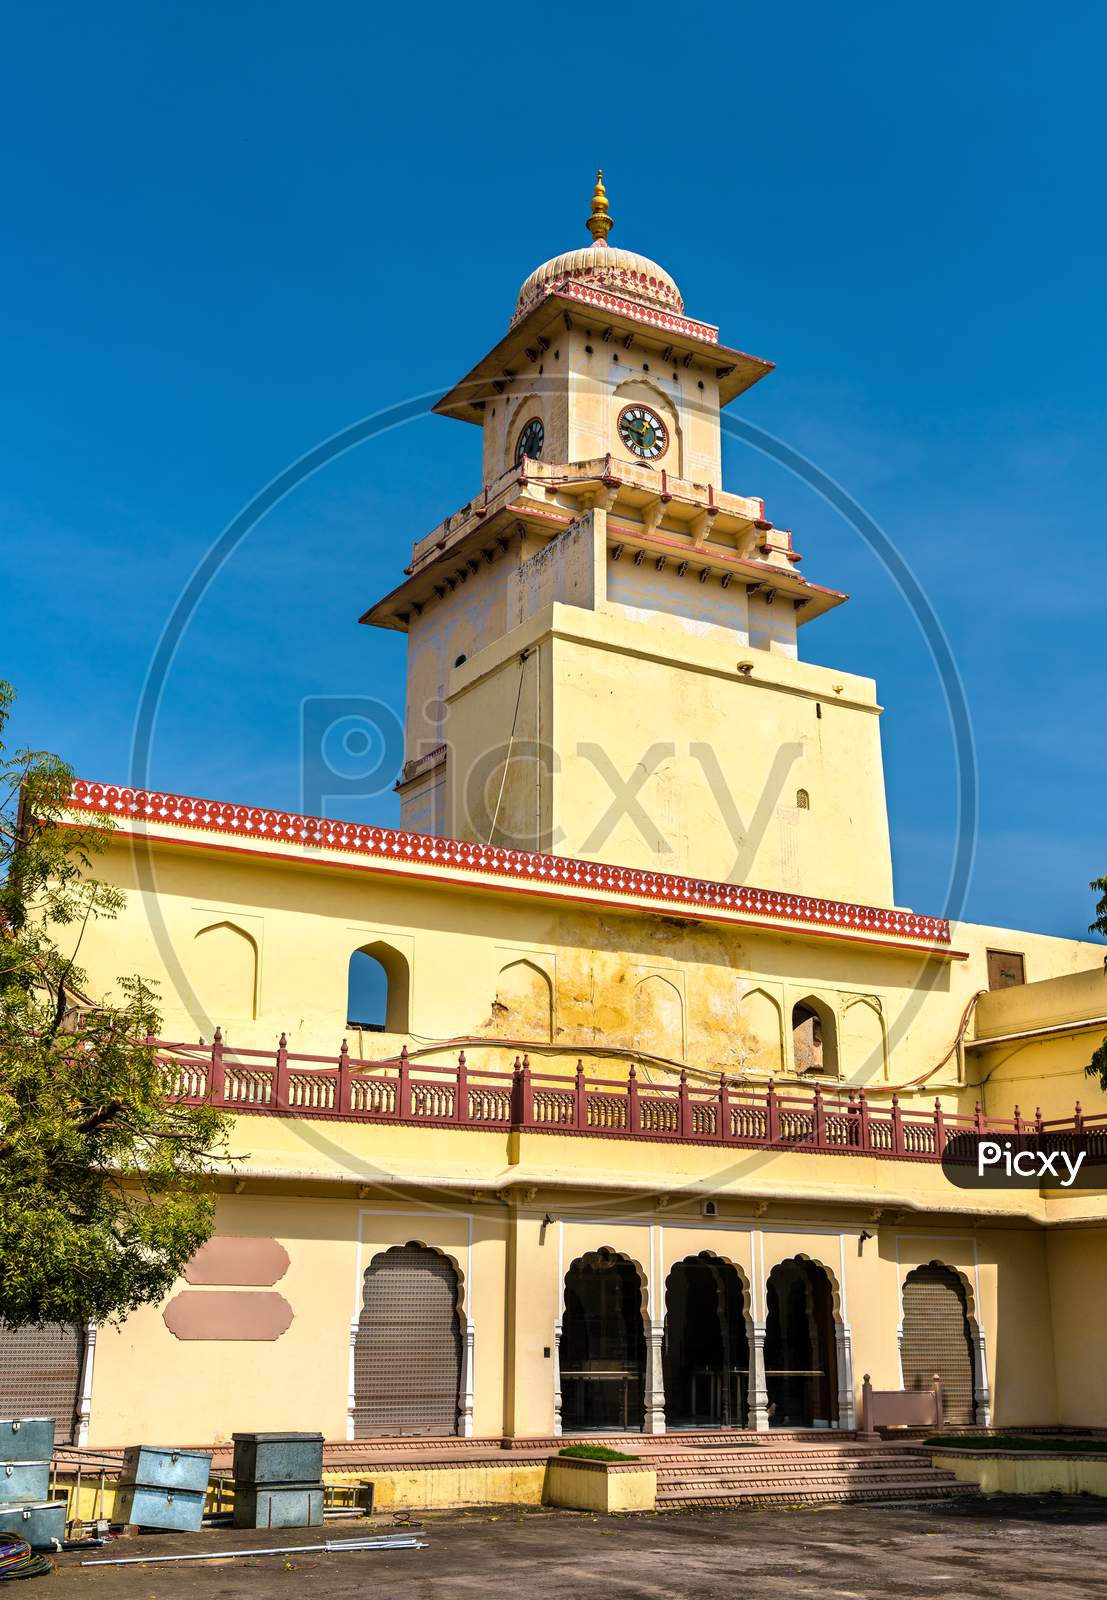 Tower At City Palace In Jaipur, India